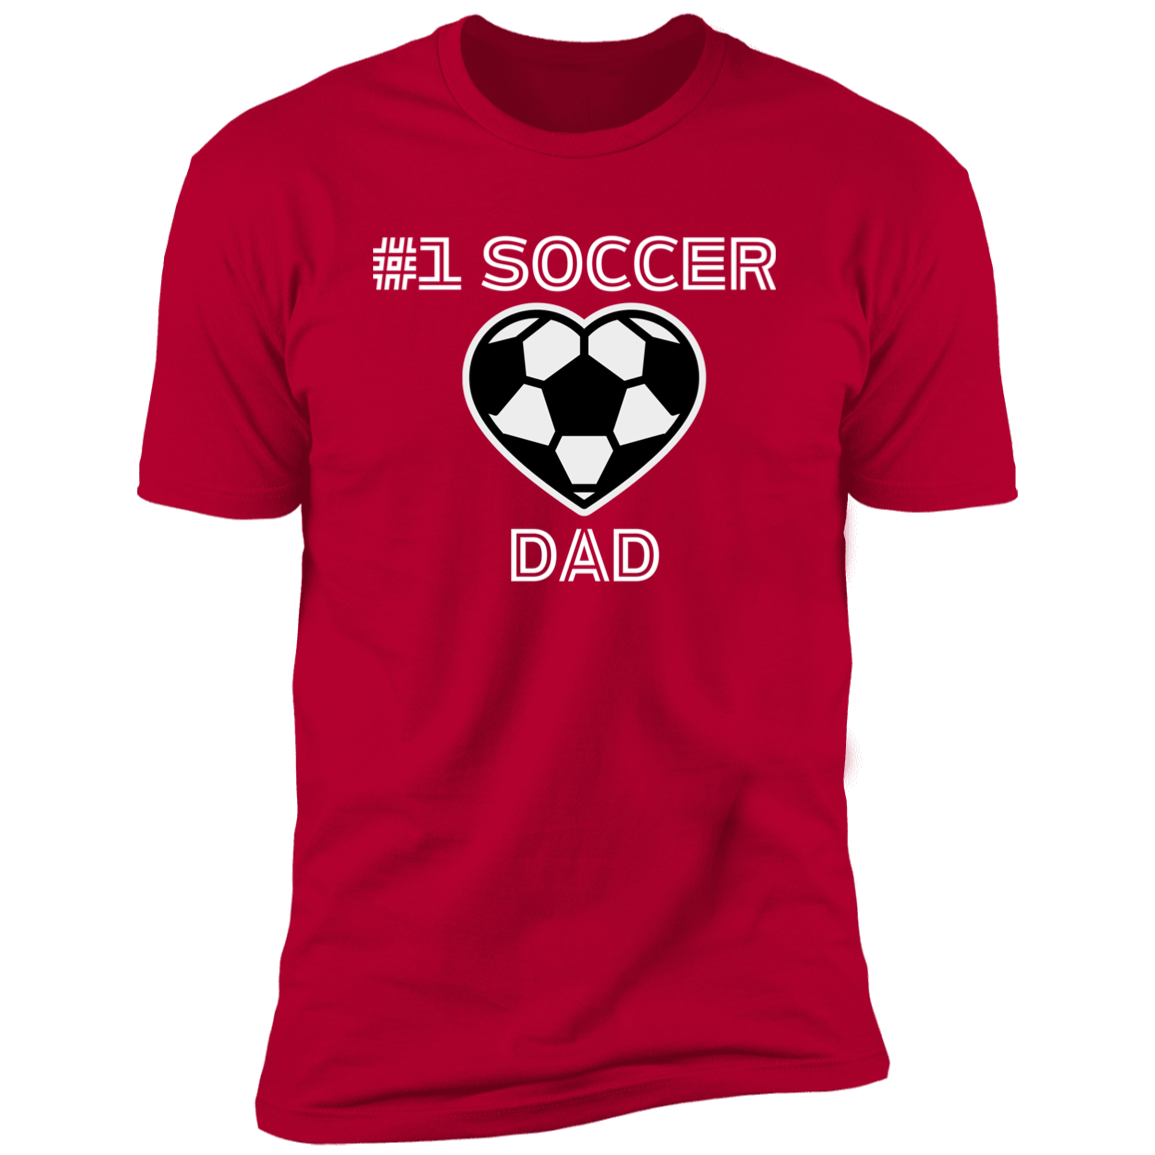 #1 Soccer Dad - White